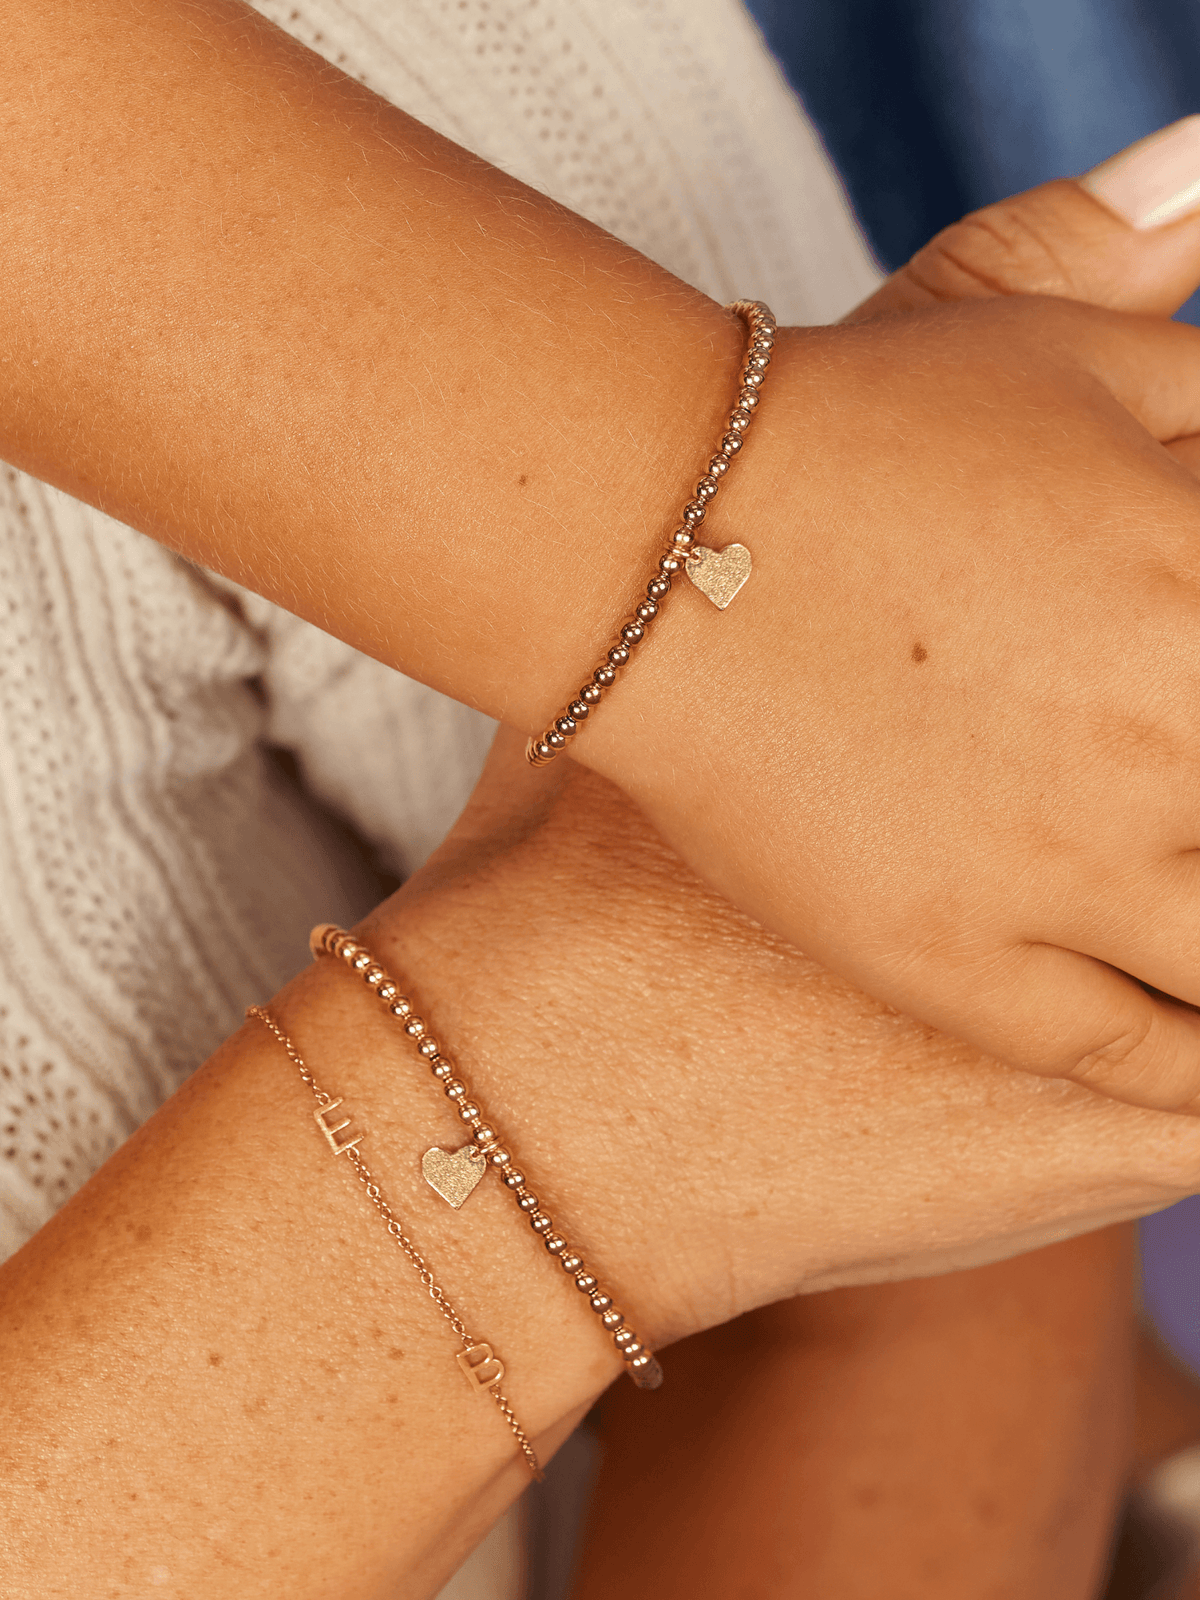 Stretch beaded bracelet with heart charm on top model's wrist and stretch beaded bracelet with heart charm stacked with gold initial bracelet on bottom model's wrist